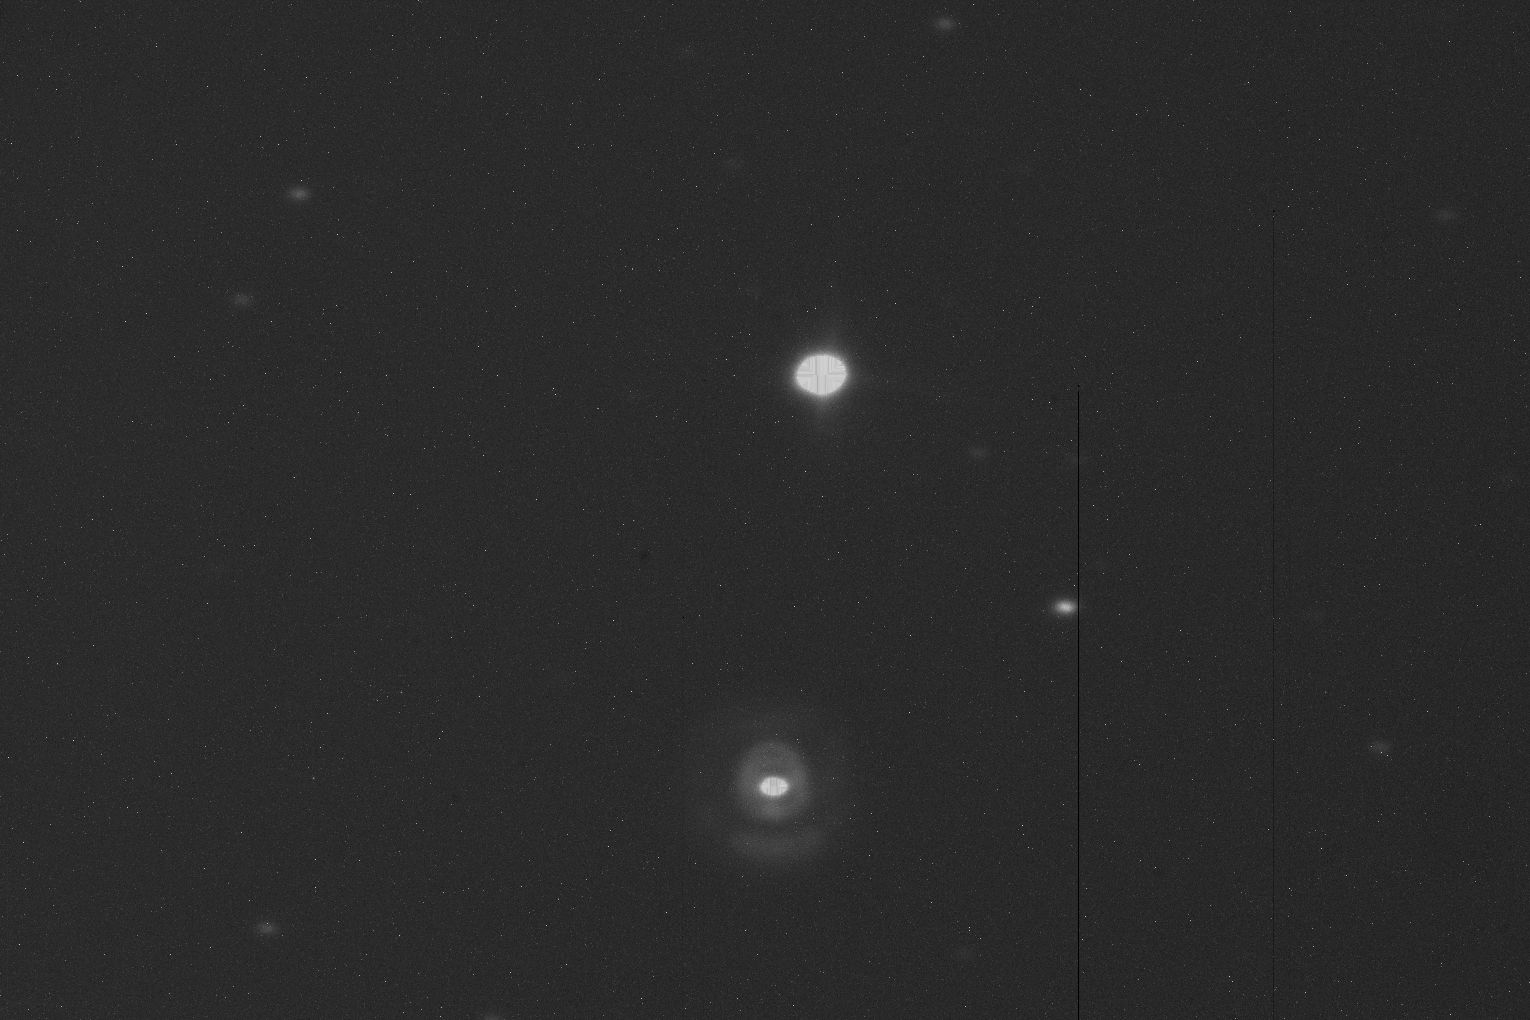 Eskimo Nebula (NGC 2392) Date: 3-26-08 Exposure: 60 Second w/ H-alpha Magnitude: 10.1 Processing: -dark -flatfield bad pixel removal despeckle  